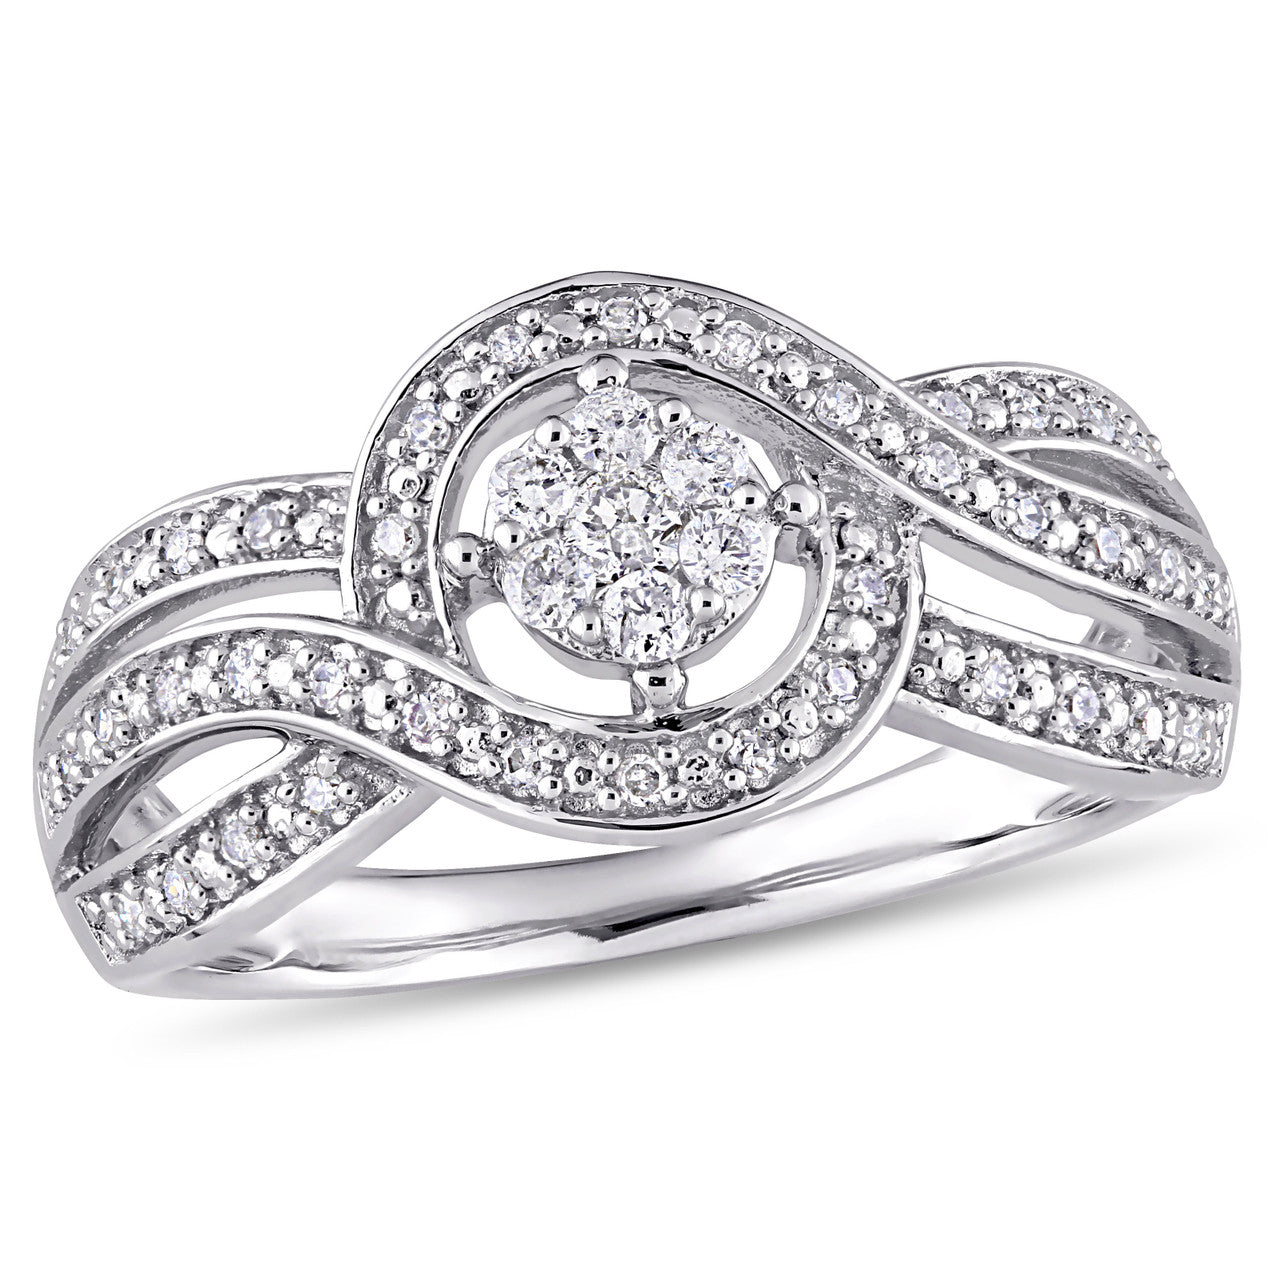 Ice Jewellery 1/4 CT Diamond TW Fashion Ring 10k White Gold GH I2;I3 - 75000004561 | Ice Jewellery Australia